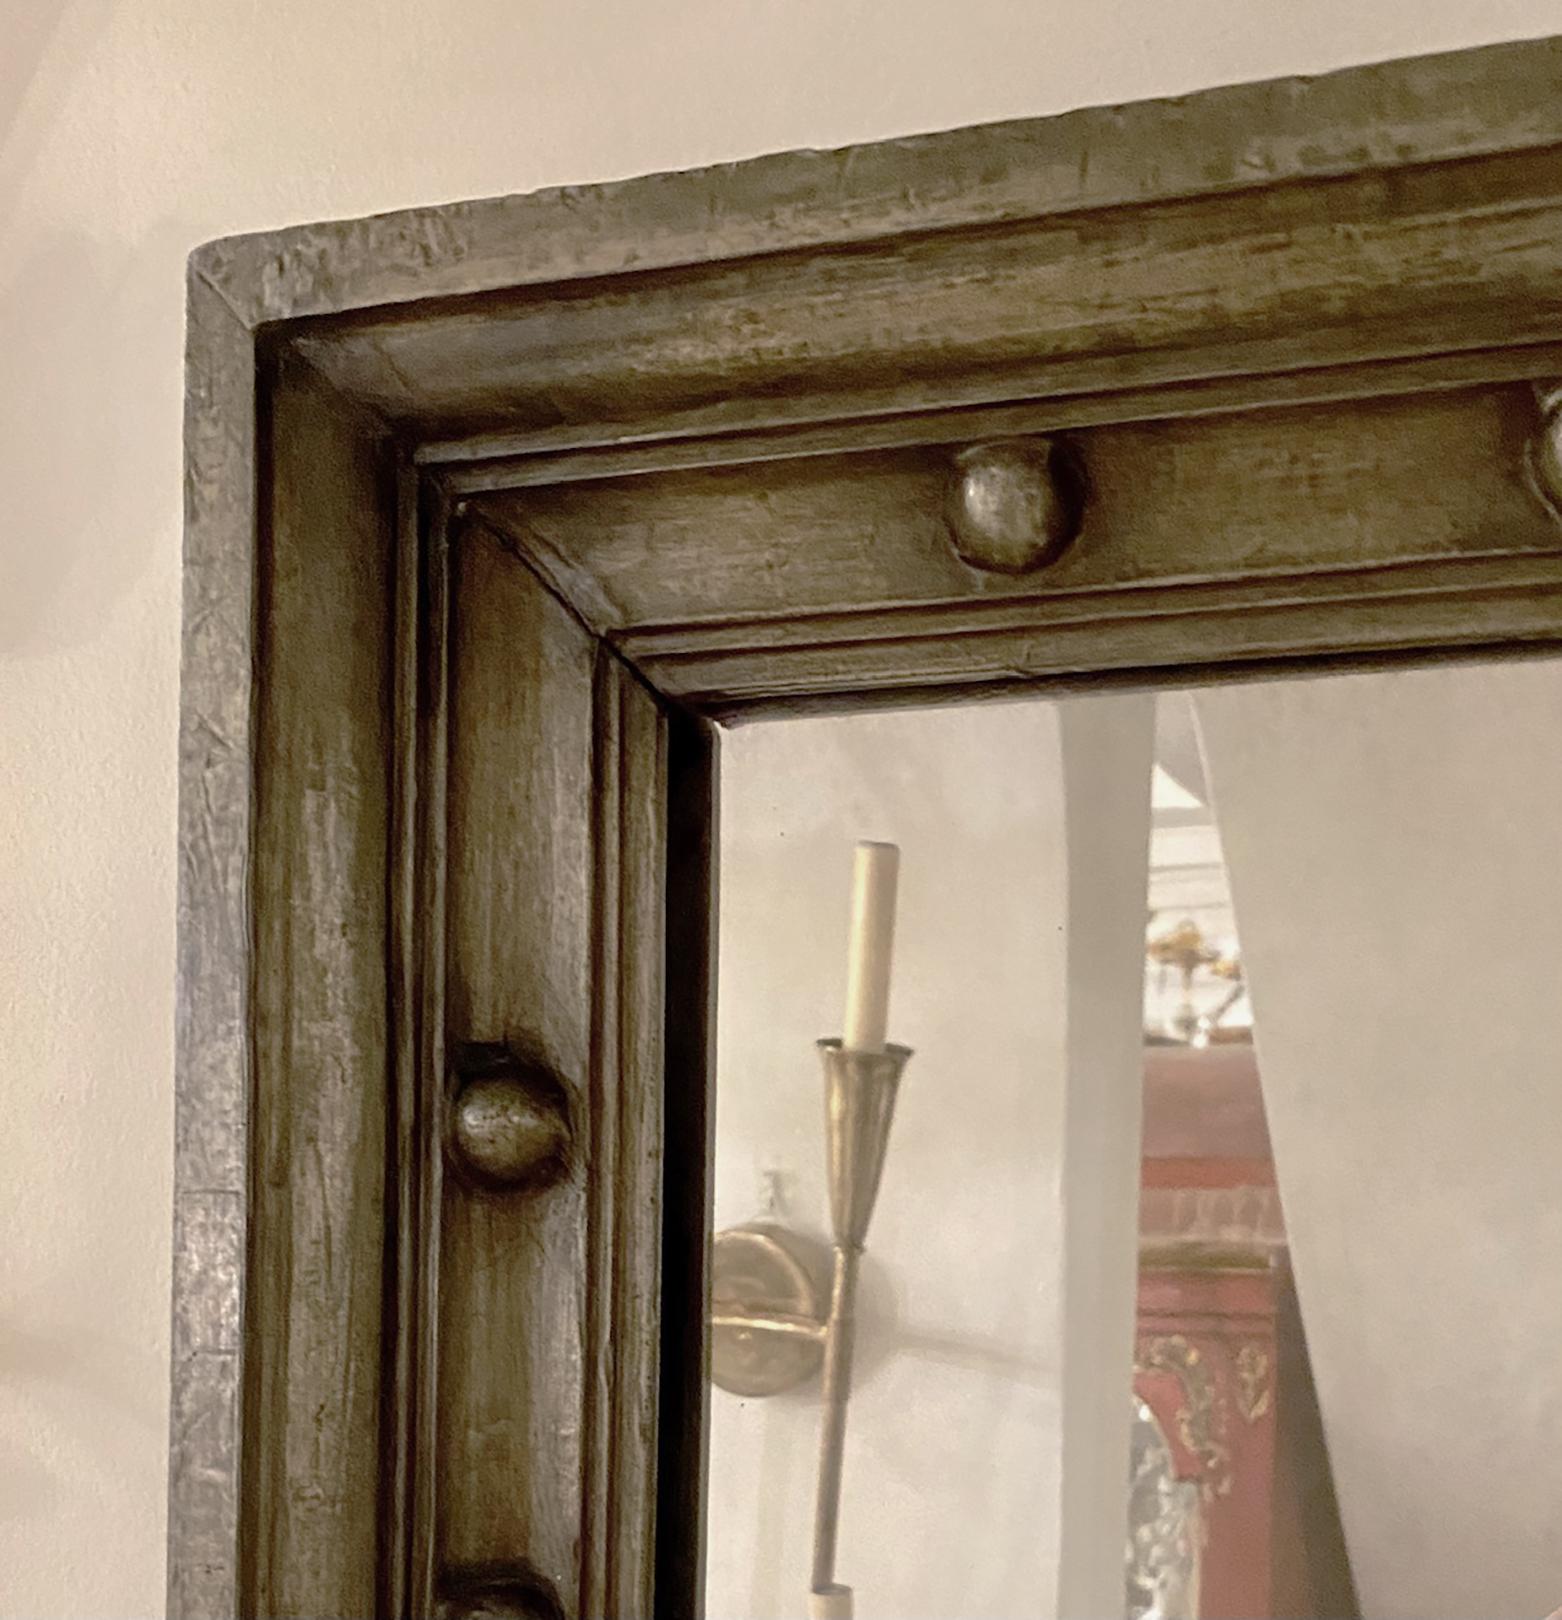 A circa 1940s Italian mirror.

Measurements:
Height: 29